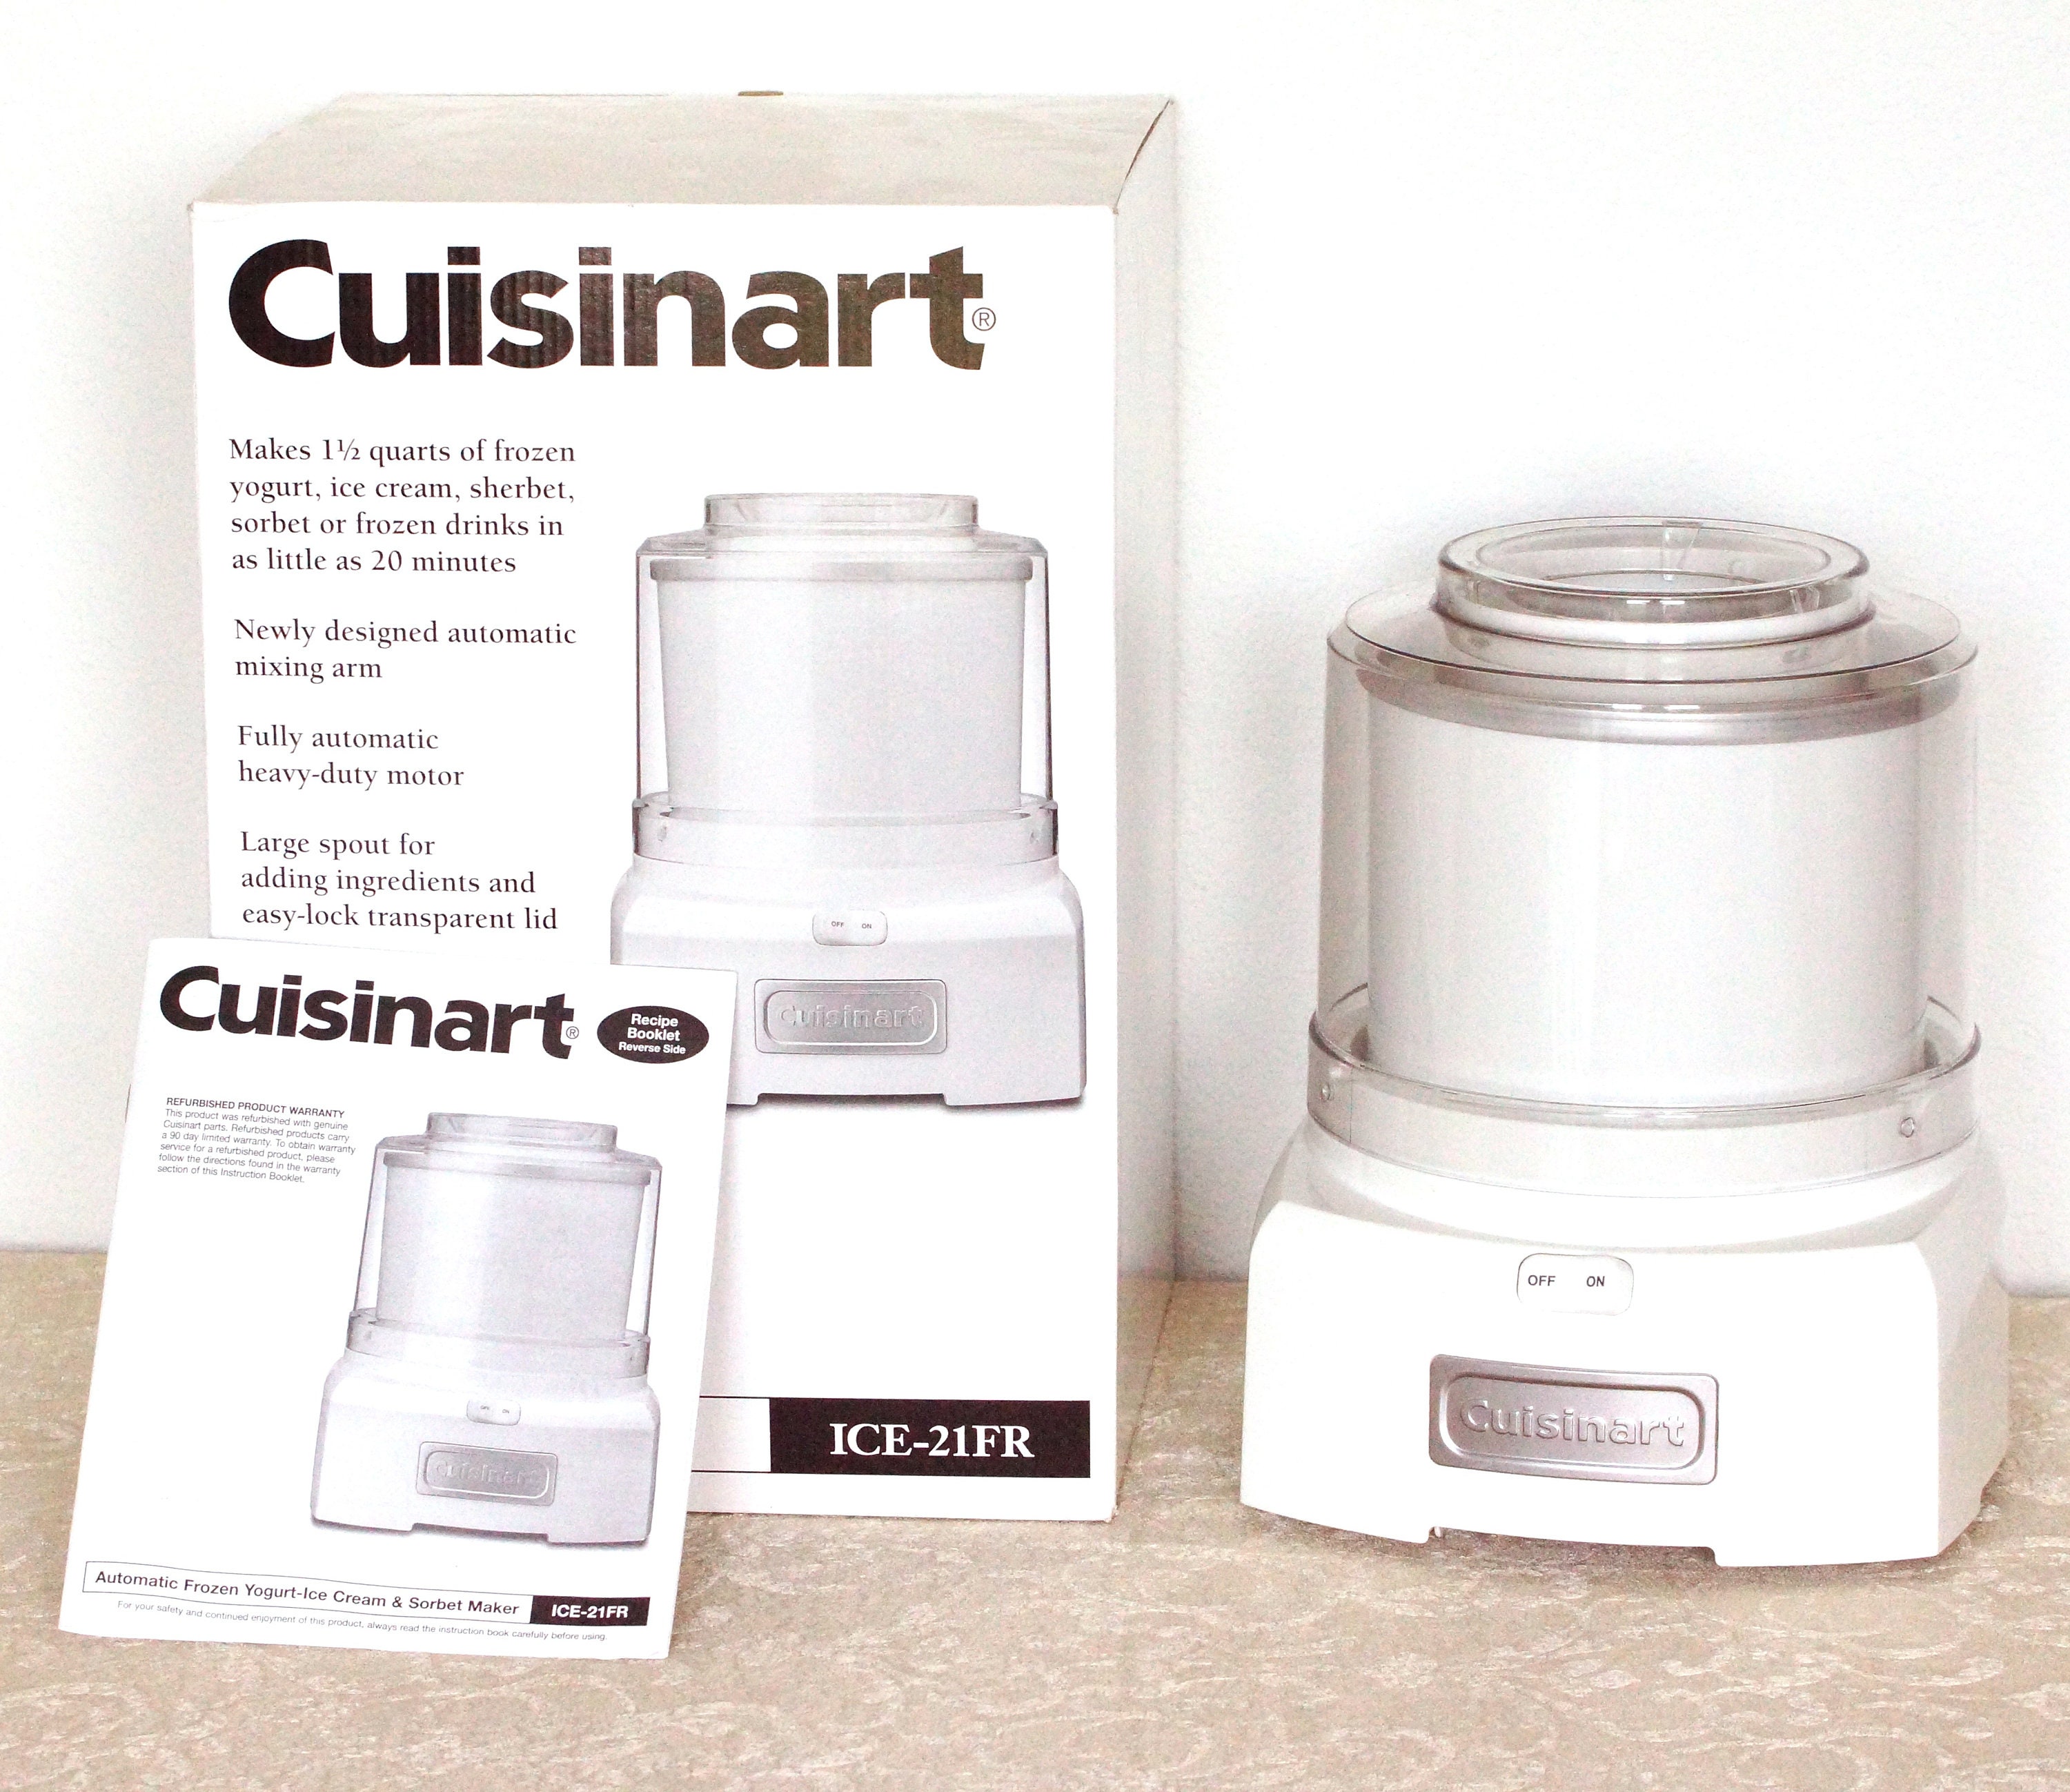 Cuisinart 2.6 Cups 600-Watt Stainless Steel Mini Food Chopper at